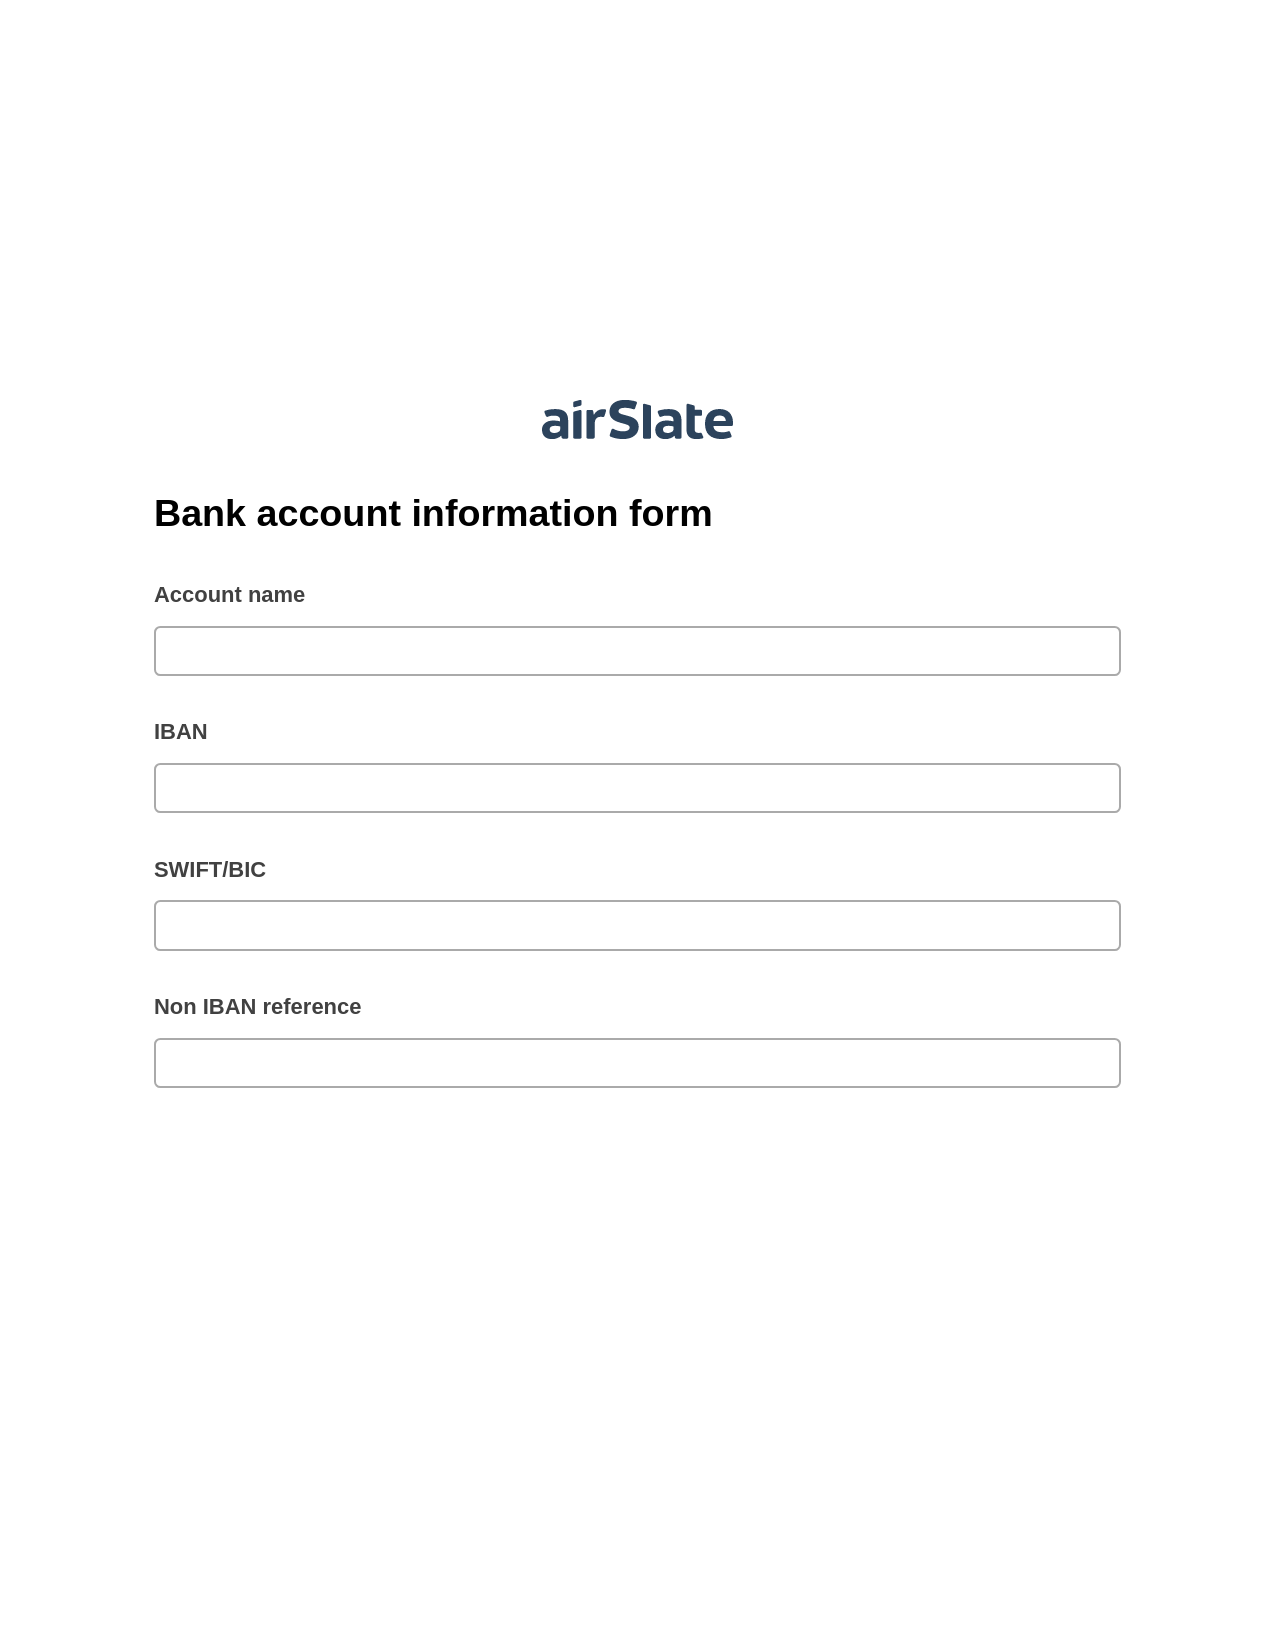 Multirole Bank account information form Pre-fill Slate from MS Dynamics 365 Records Bot, Set signature type addon, Slack Notification Postfinish Bot